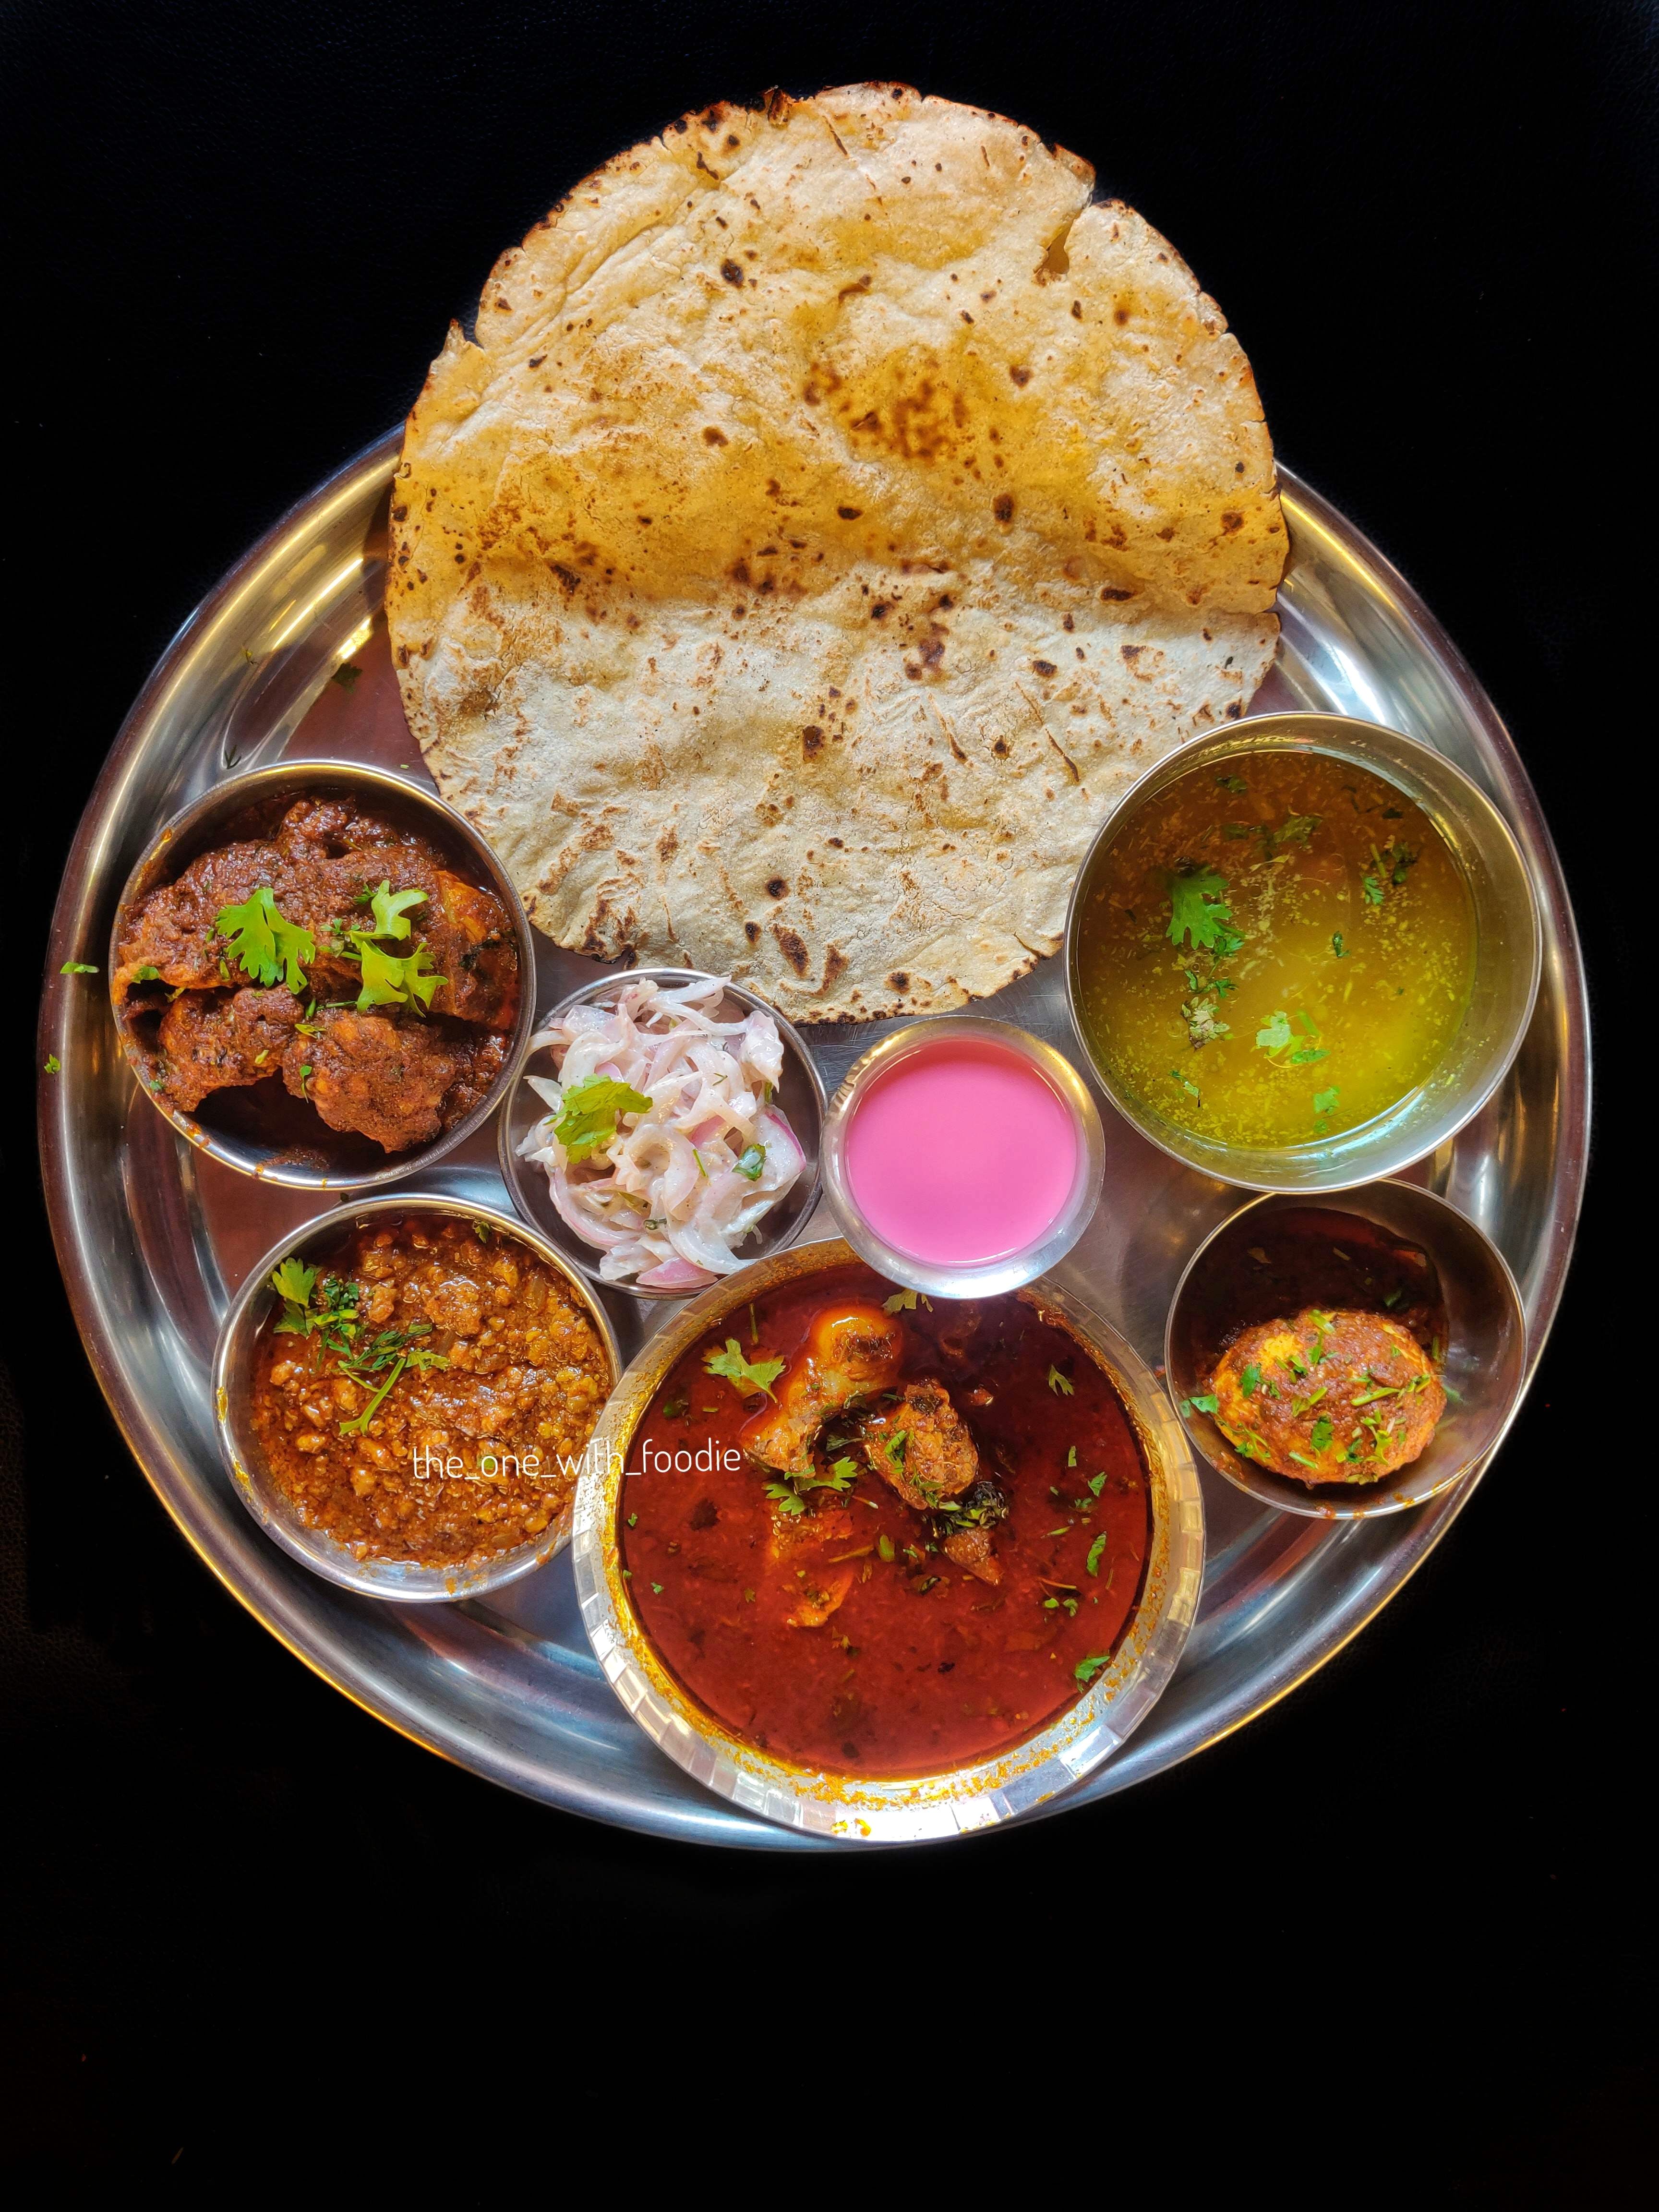 Dish,Food,Cuisine,Ingredient,Curry,Punjabi cuisine,Indian cuisine,Meal,Sindhi cuisine,Produce